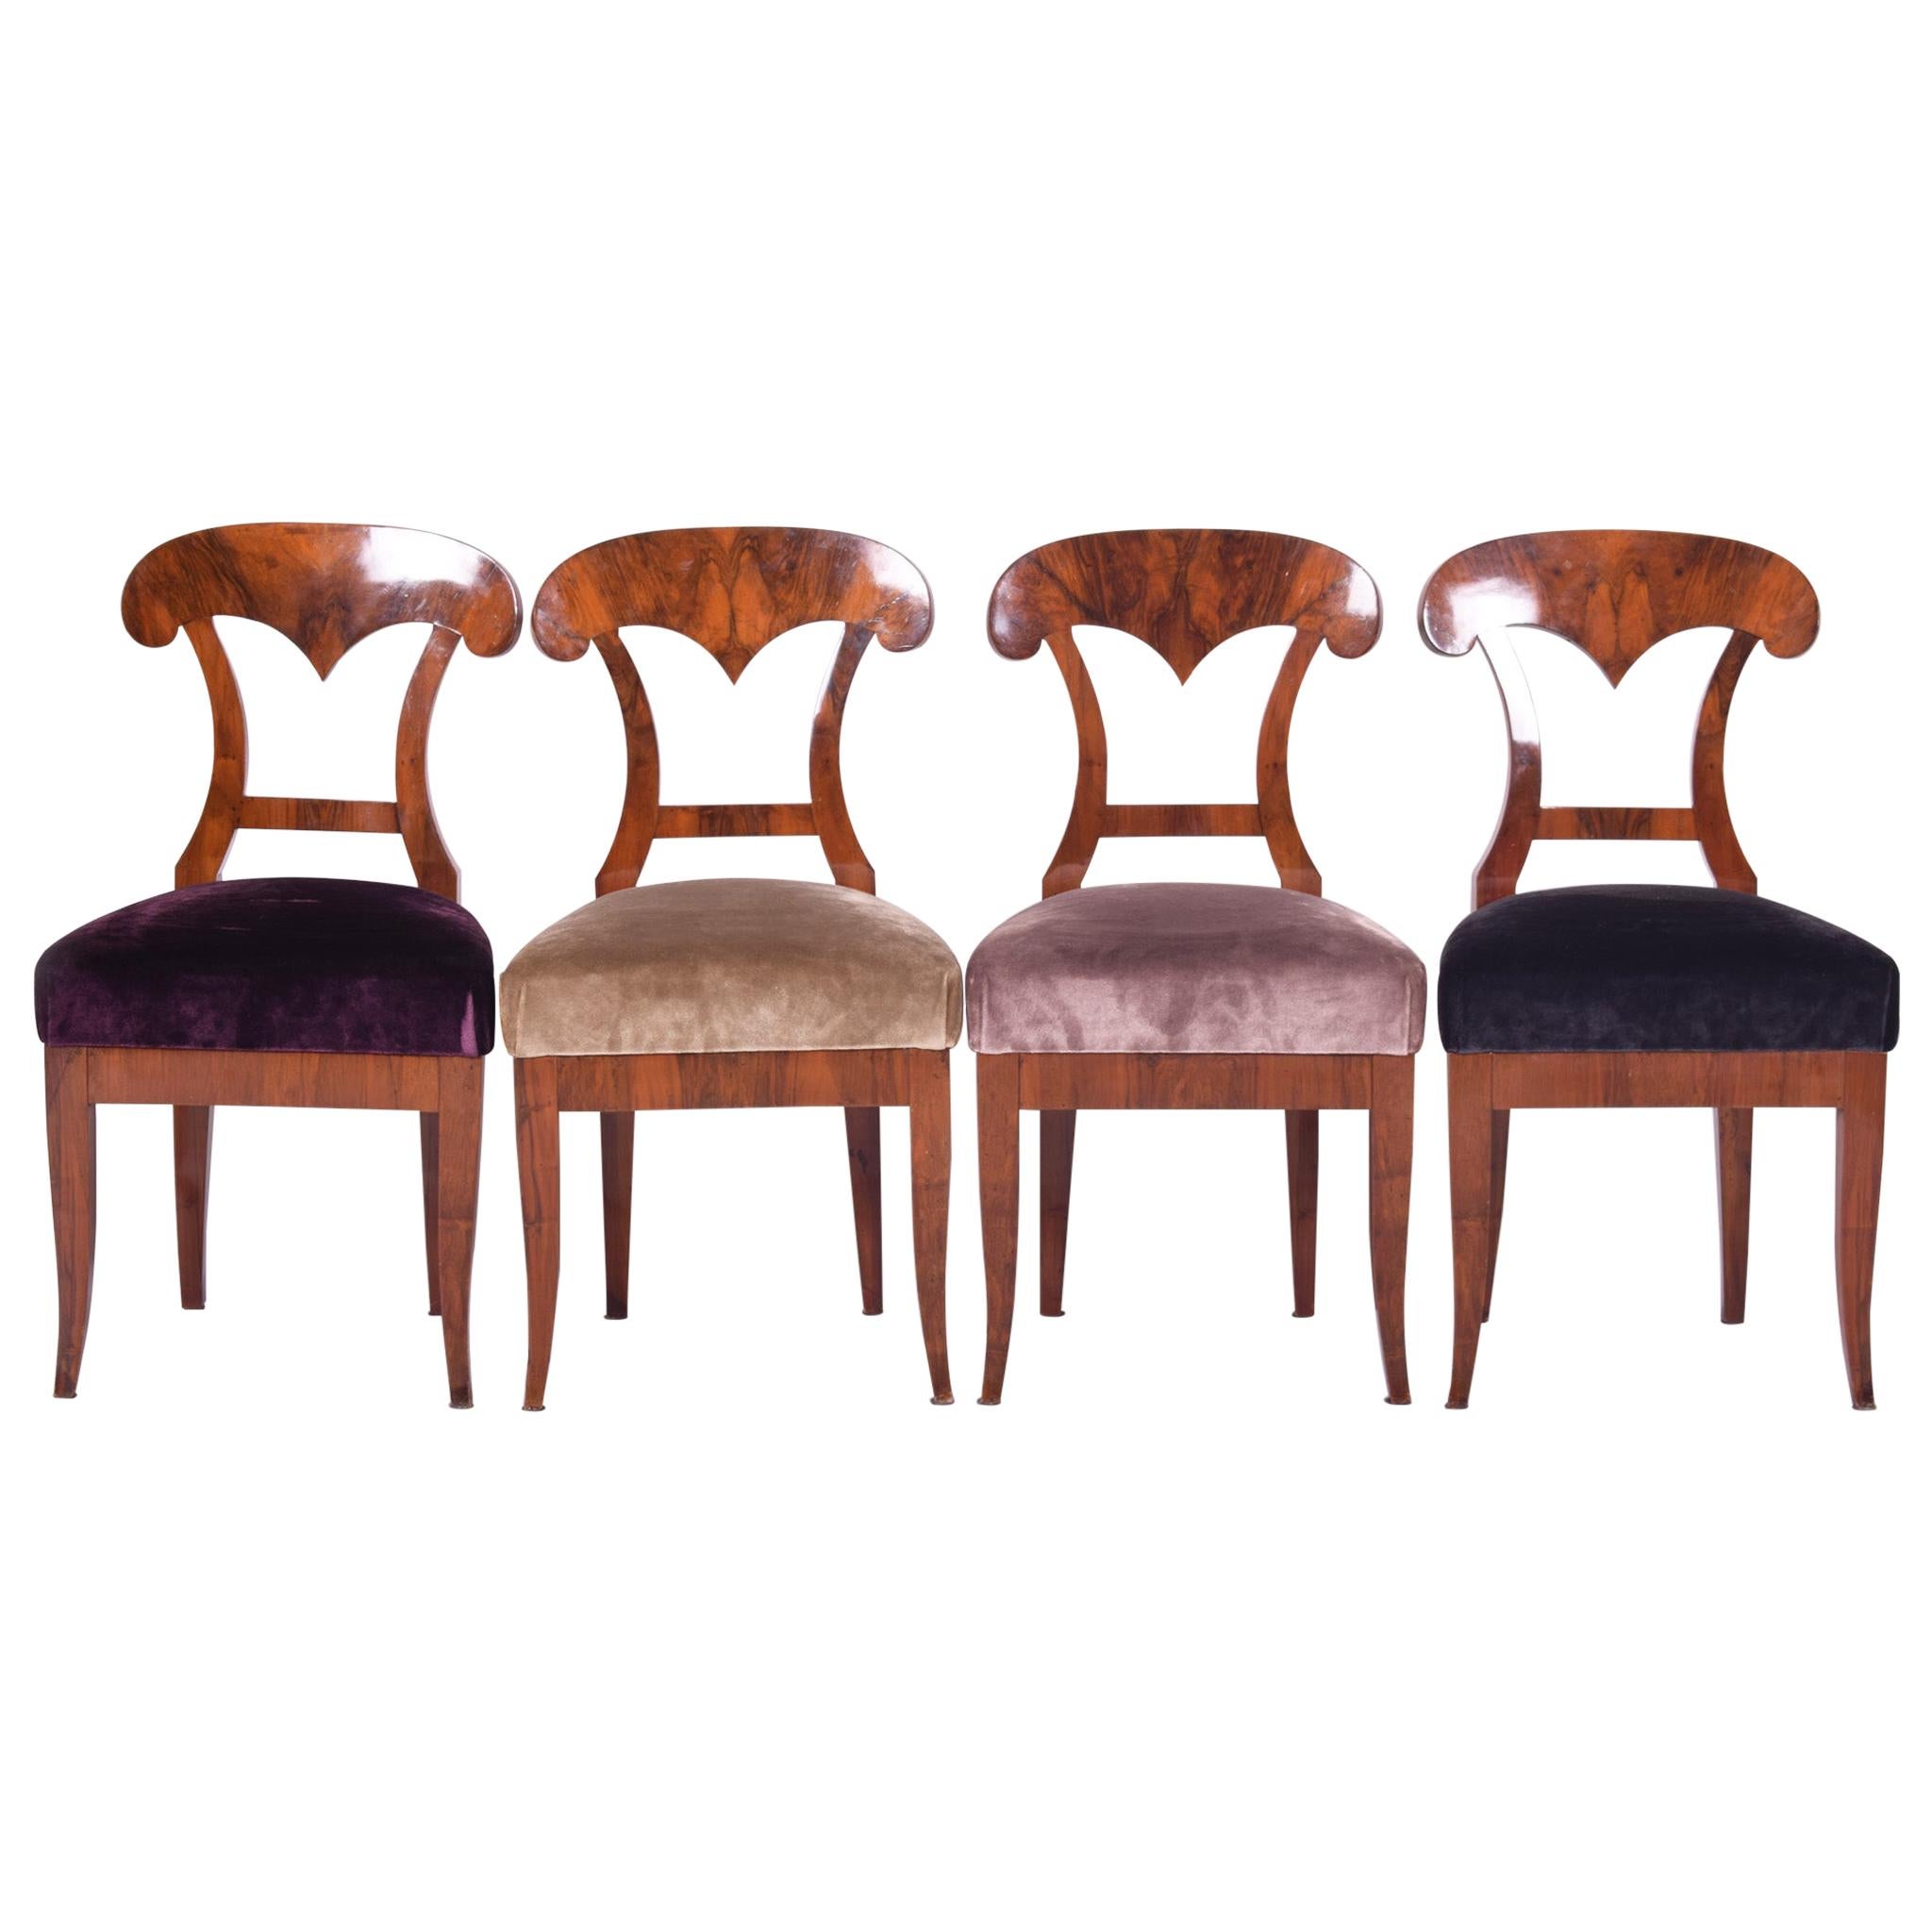 19th Century Walnut Austrian Biedermeier Chairs, 4 Pieces, 1830s, New Upholstery